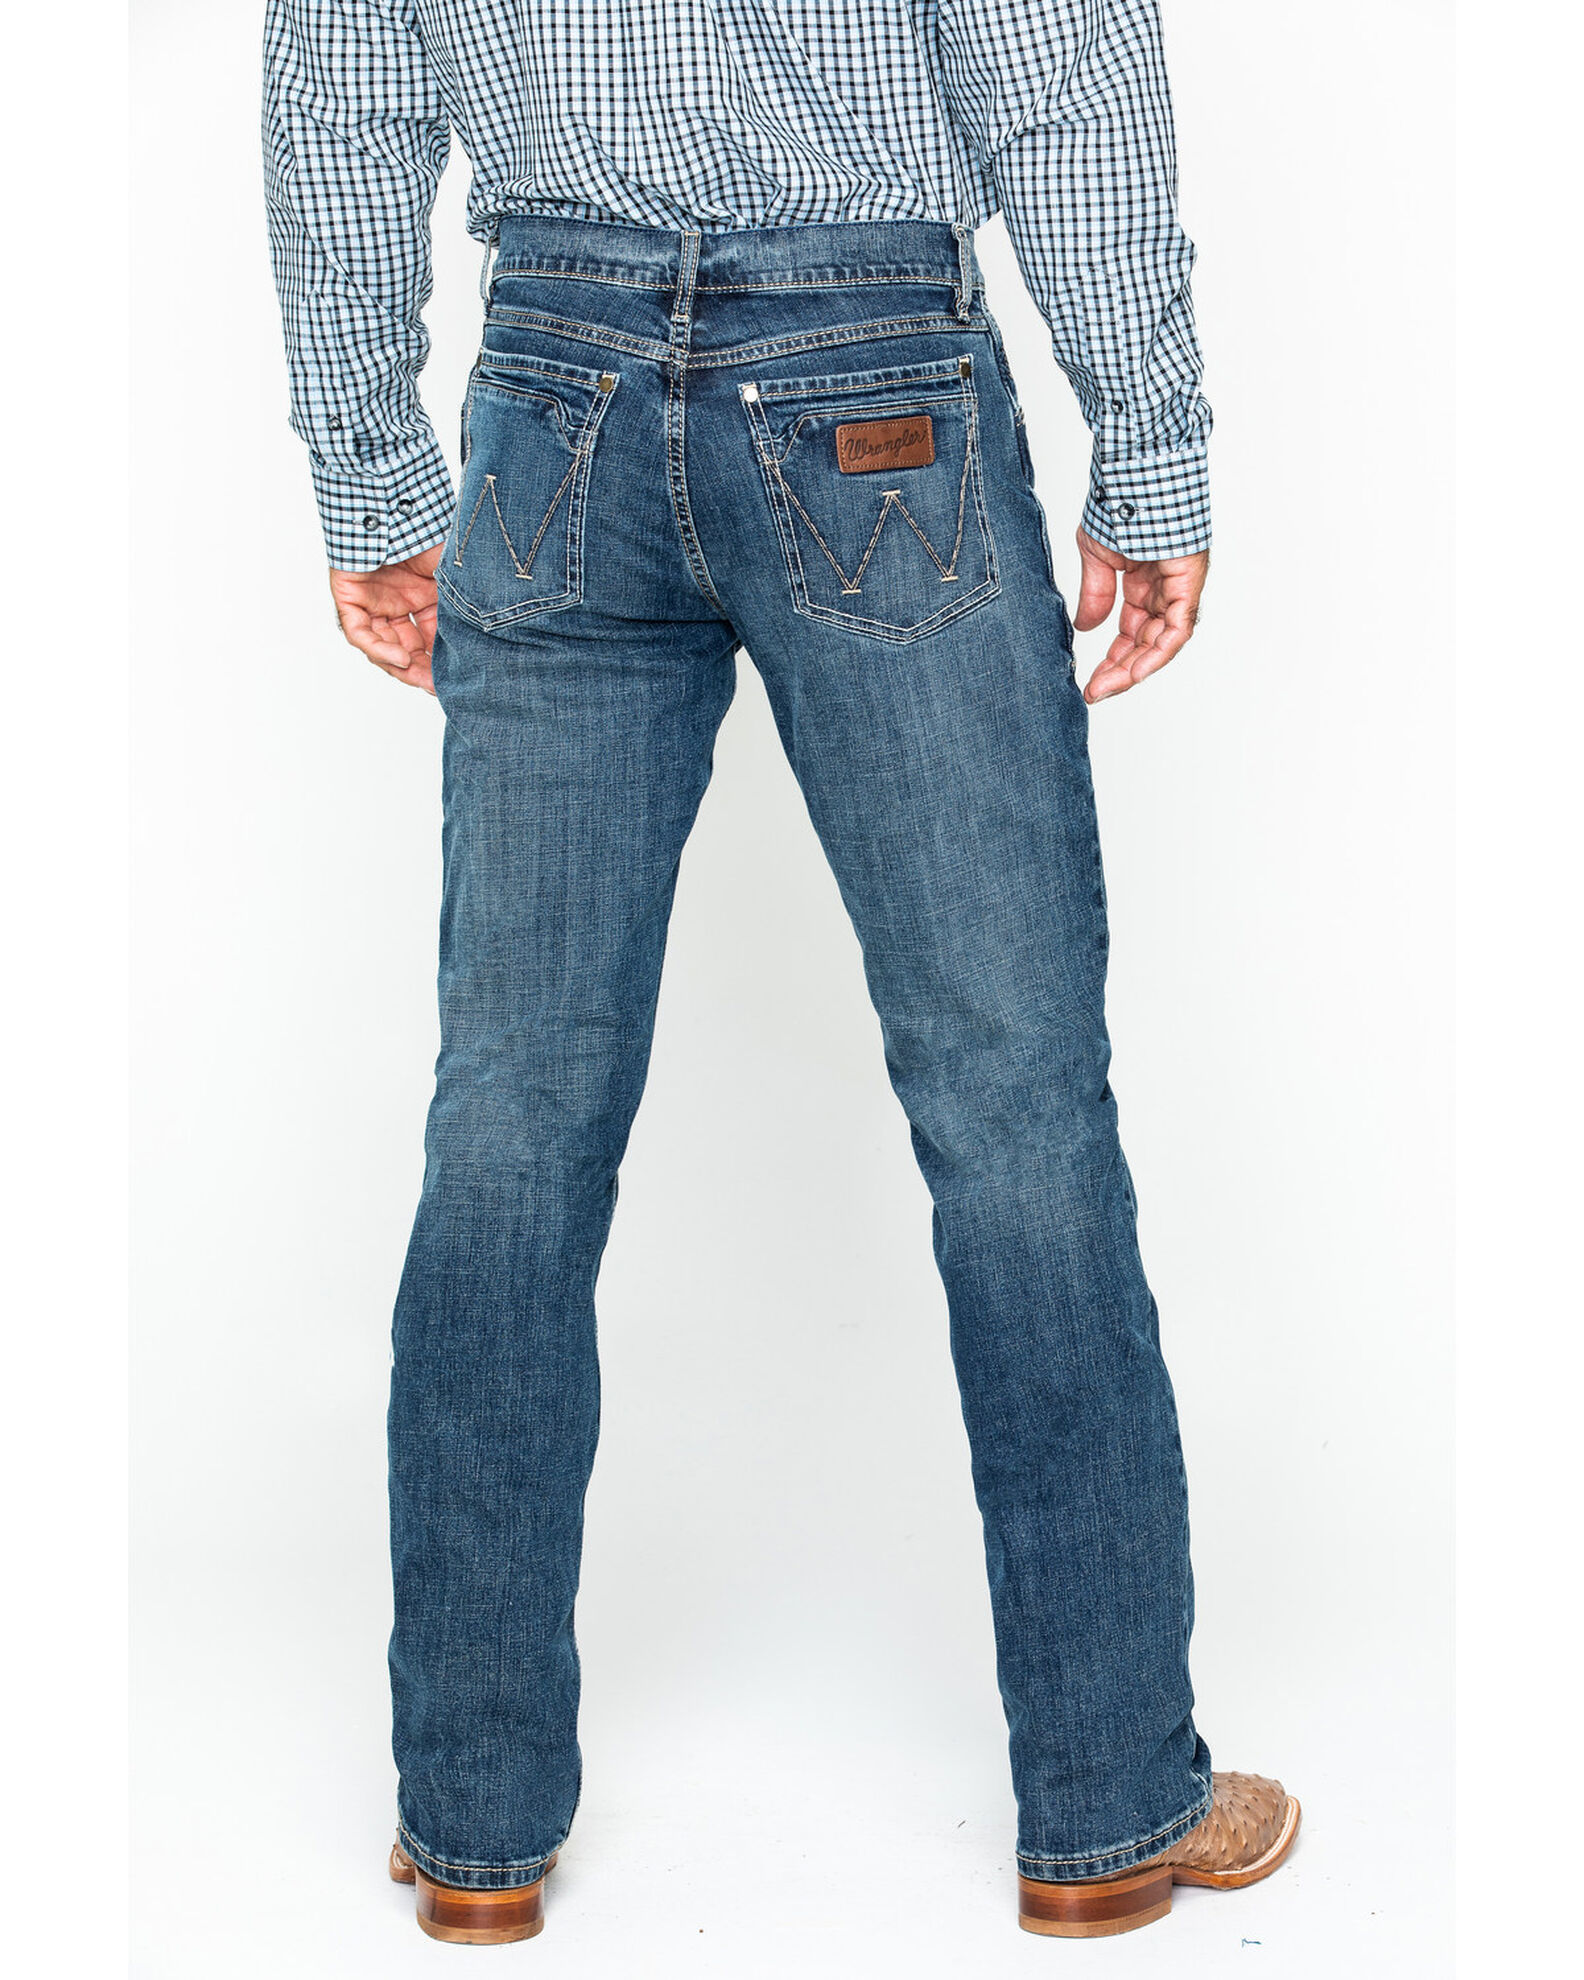 Wrangler Men's Limited Edition Retro Boot Jeans | Boot Barn